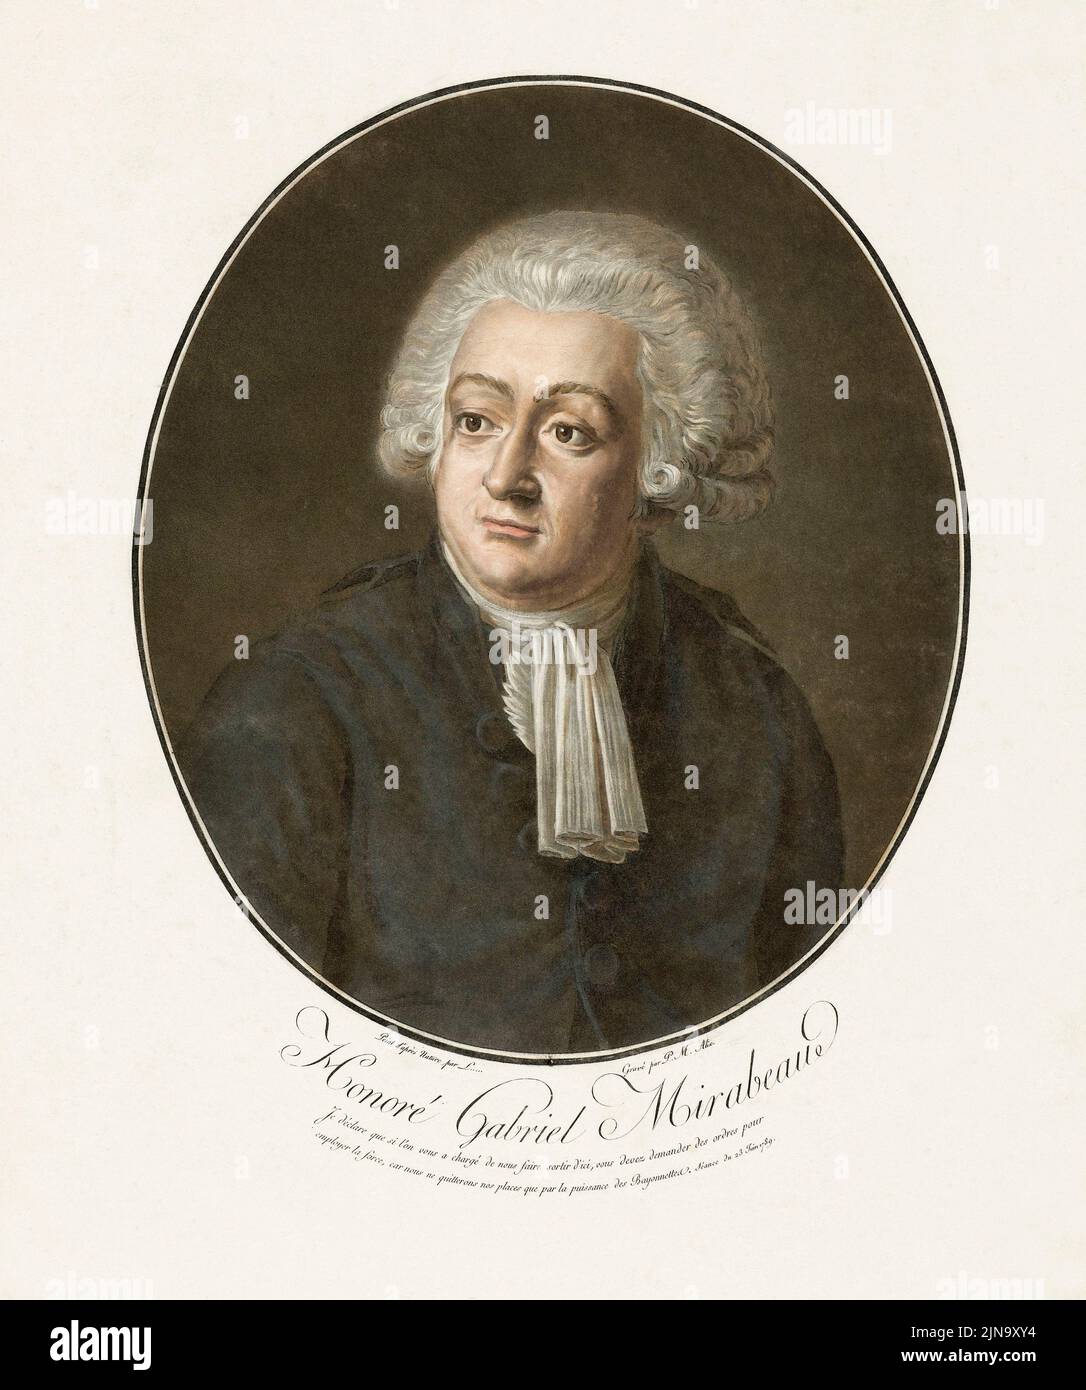 Honoré Gabriel Riqueti Mirabeau, conde de Mirabeau, 1749-1791. Estadista revolucionario francés. Después de un siglo 18th portait de finales de un artista anónimo. Foto de stock